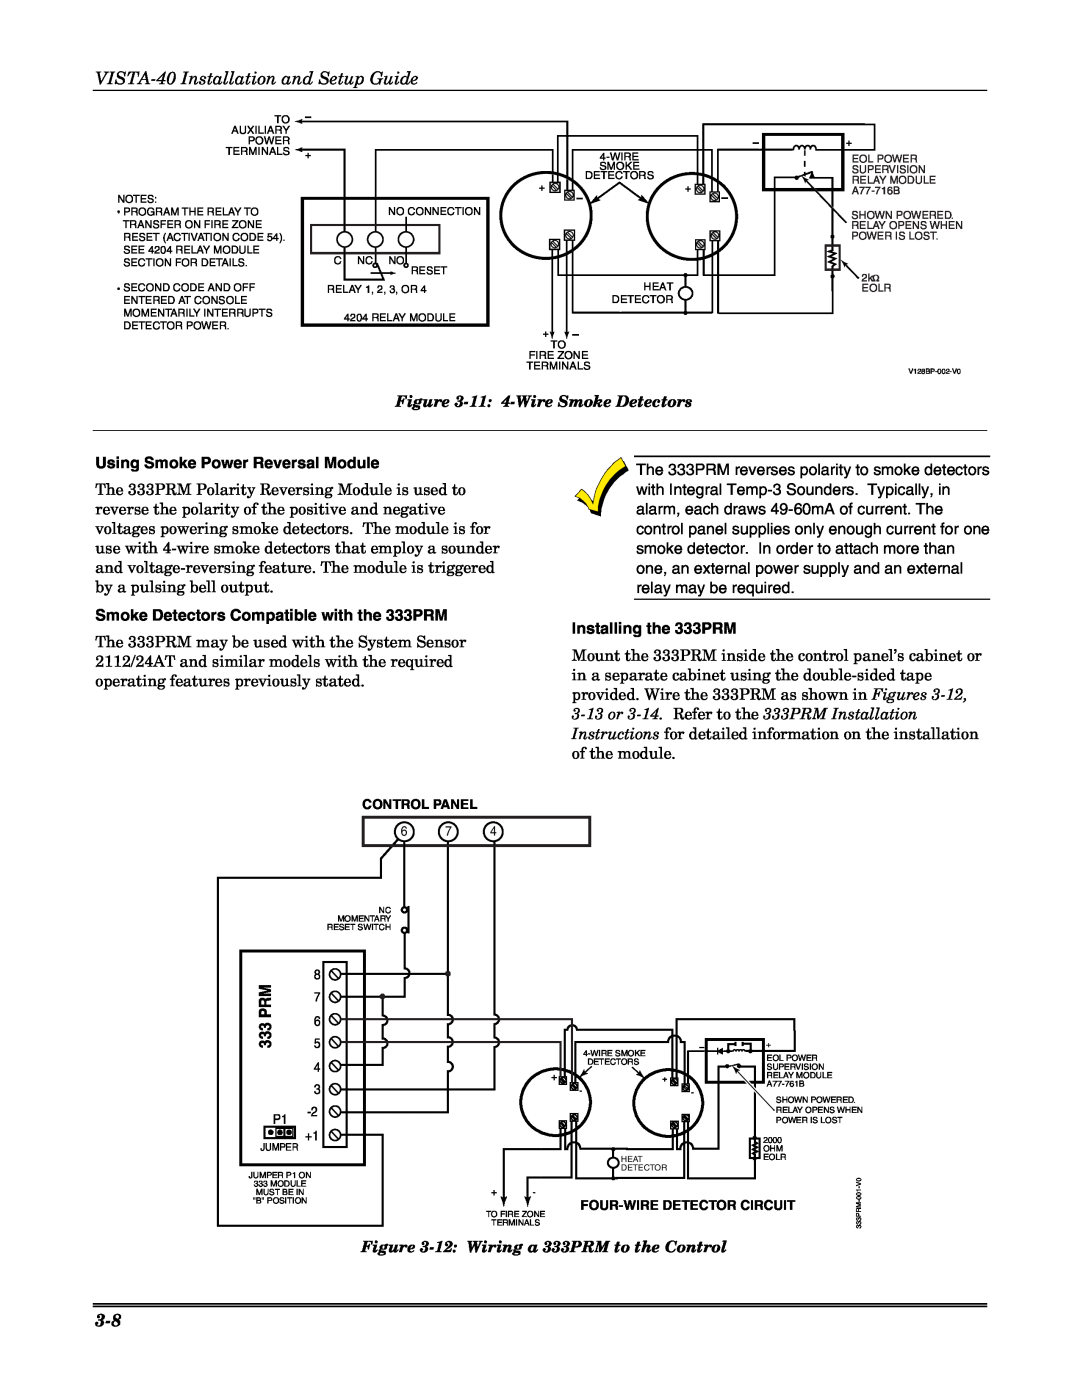 Honeywell ZyAIR G-3000 VISTA-40InstallationTOand Setup Guide, Using Smoke Power Reversal Module, Installing the 333PRM 